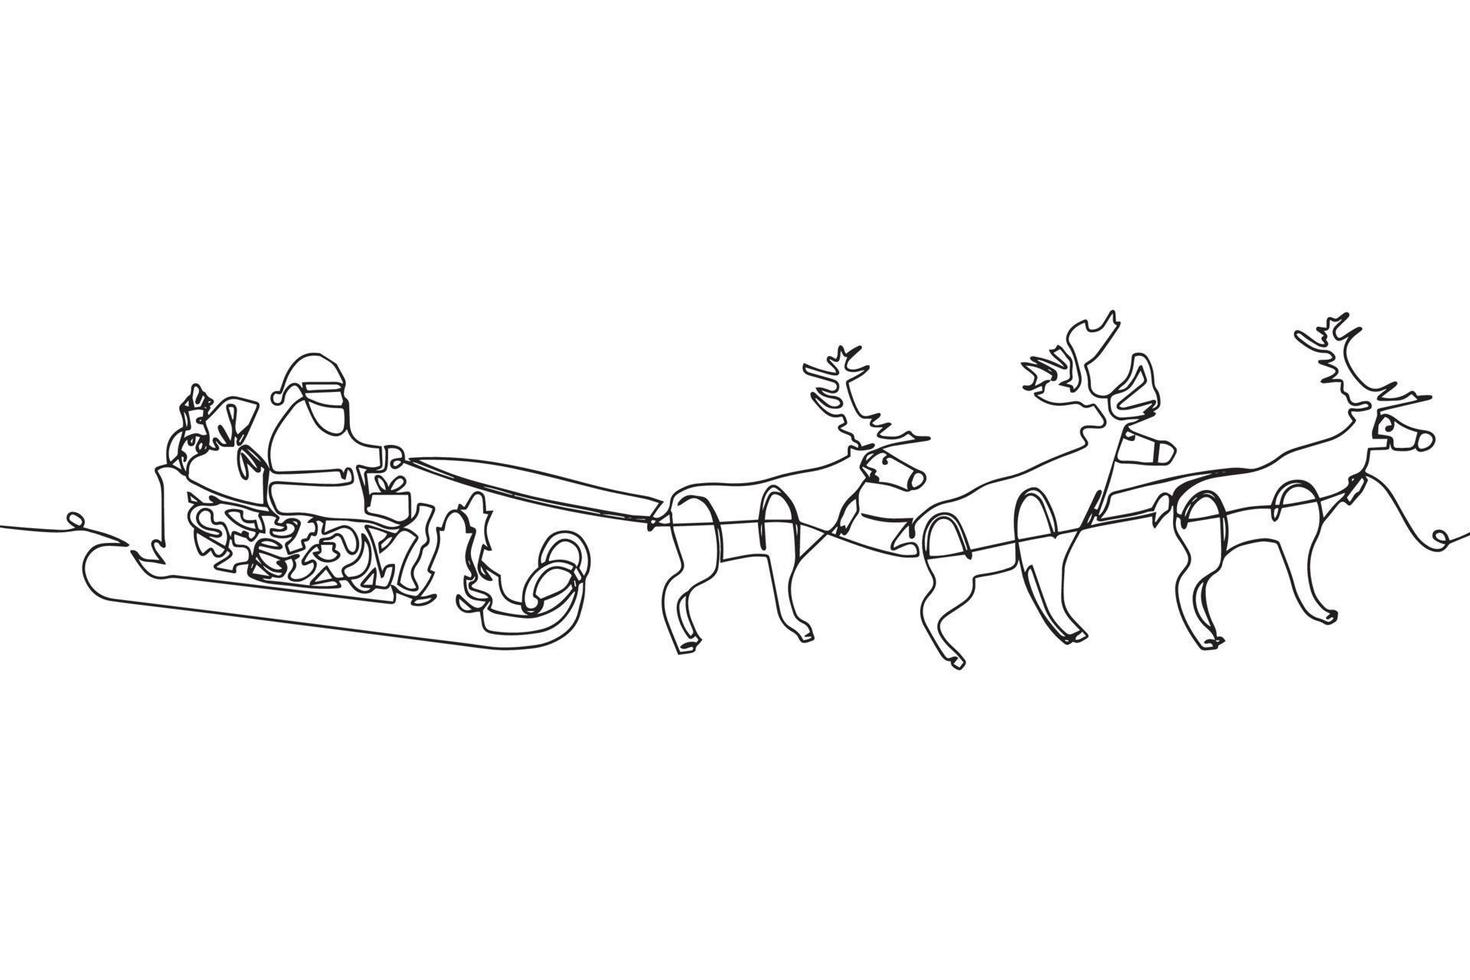 One line drawing. Vector cartoon sleigh with reindeer, Santa Claus sleigh. Christmas element with cute deers